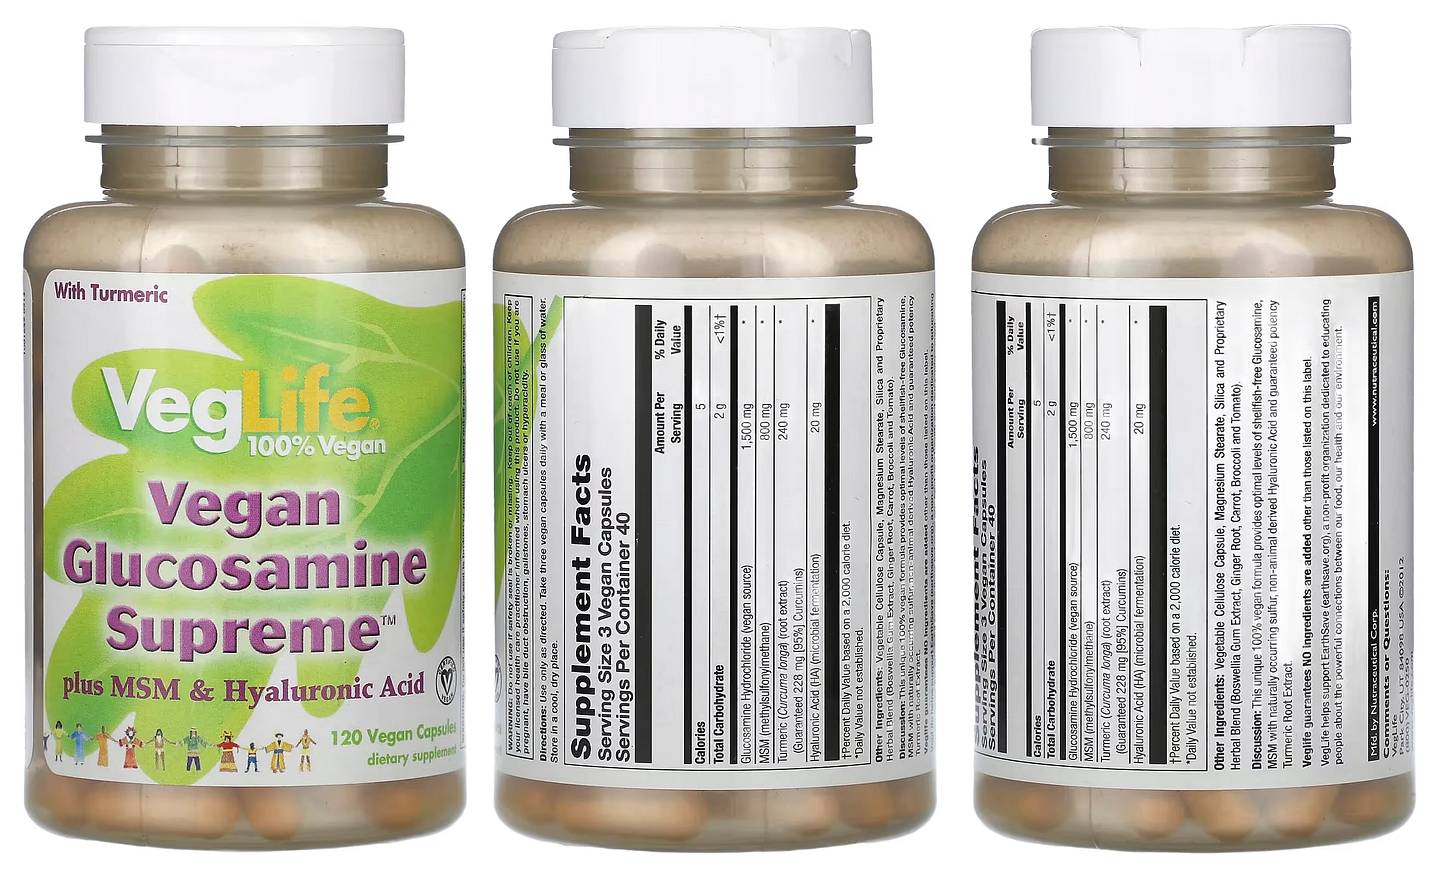 VegLife, Vegan Glucosamine Supreme packaging